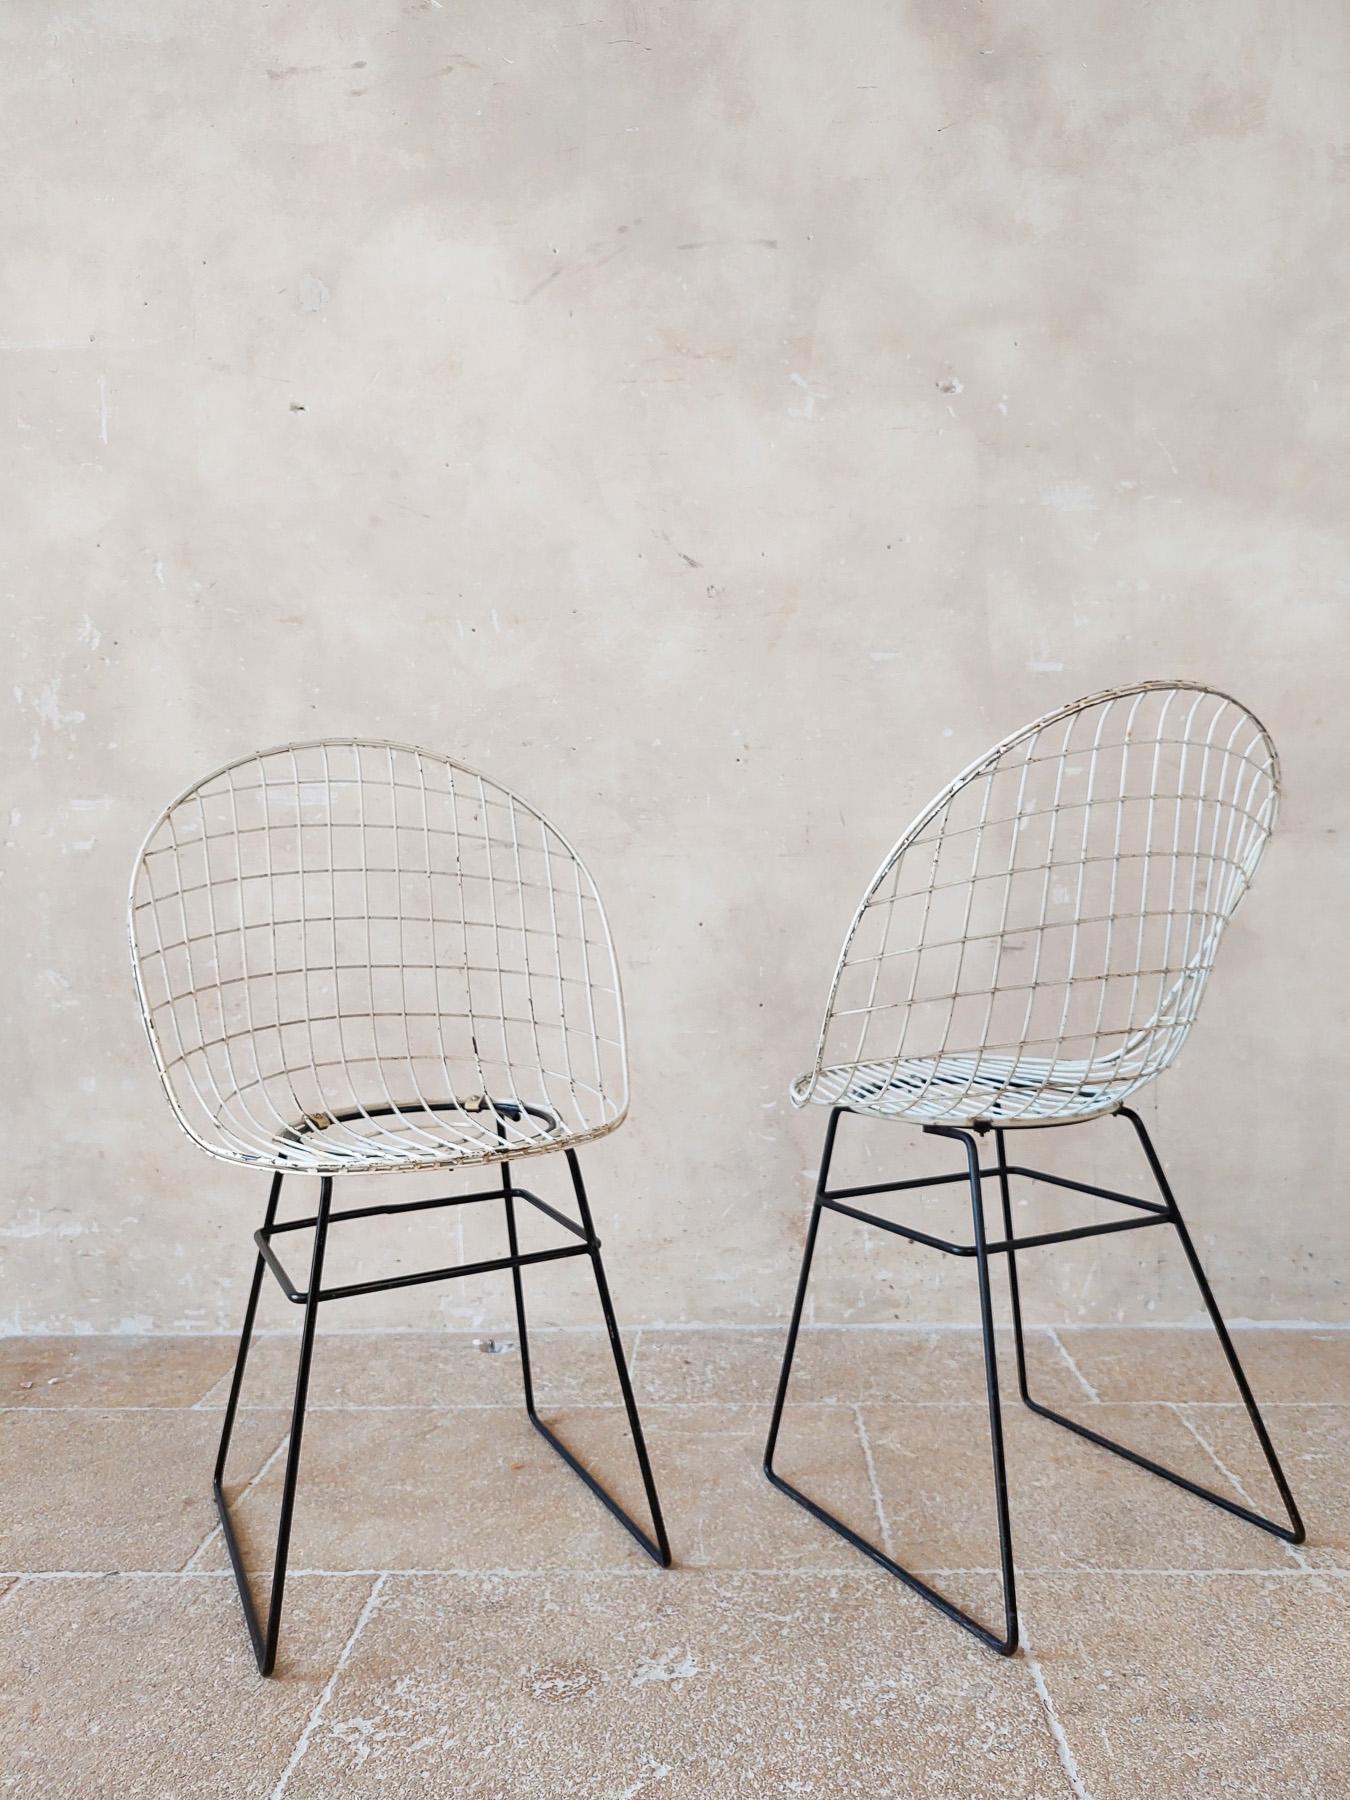 Pair of 1950s Pastoe wire chairs by Cees Braakman and Adriaan Dekker For Sale 5